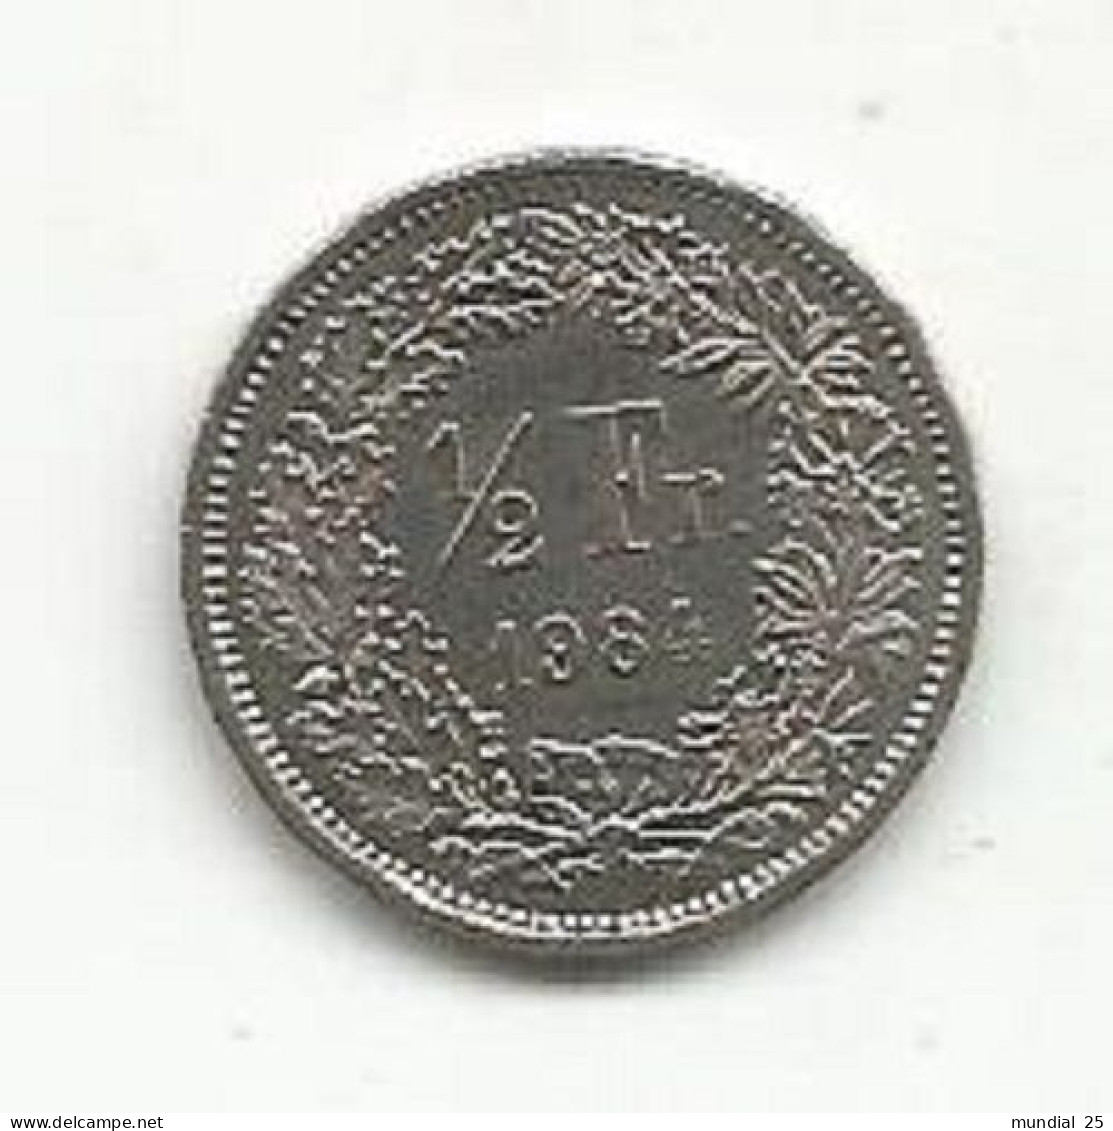 SWITZERLAND 1/2 FRANC 1984 - 1/2 Franc